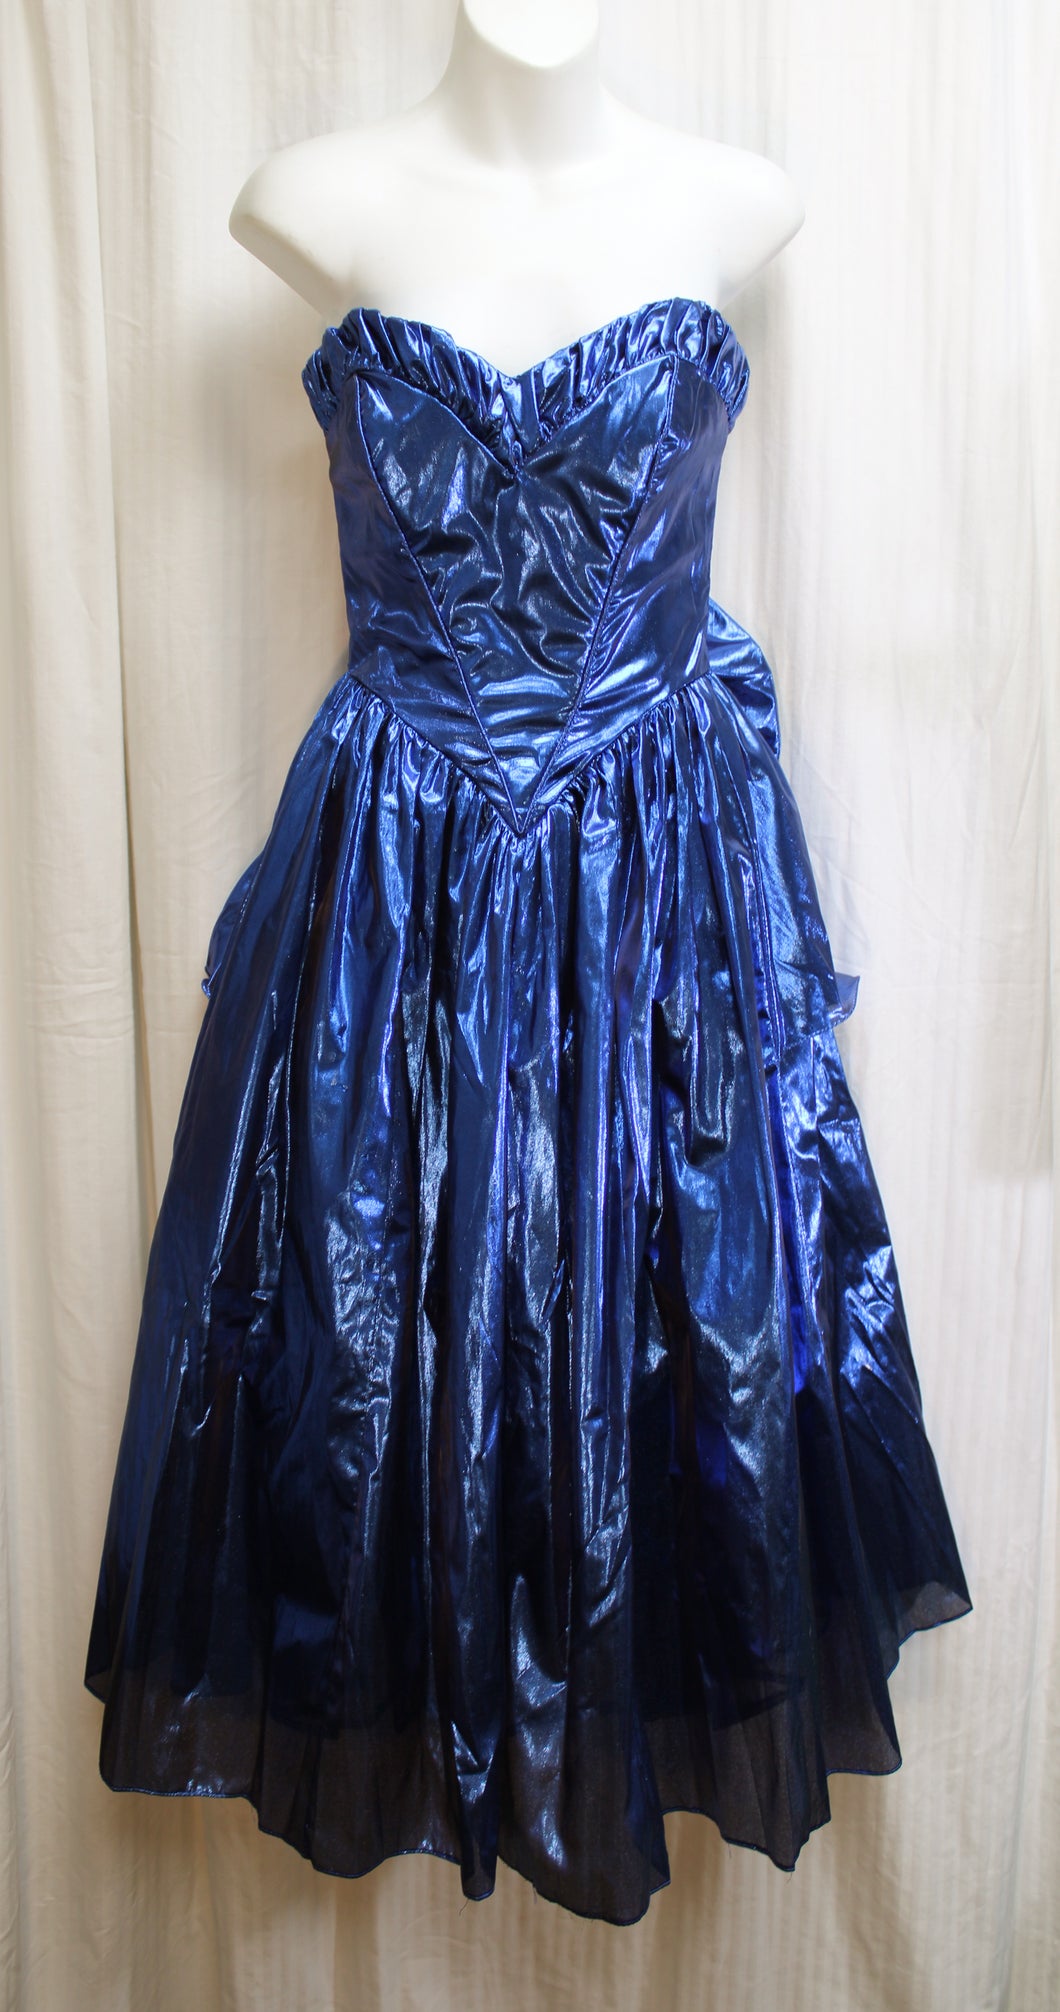 Vintage 80's - Zum Zum - Strapless Metallic Blue Lamé, Poof Skirt Party /Prom Dress w/ Back Bow - Size 5/6 (Vintage See Measurements 24